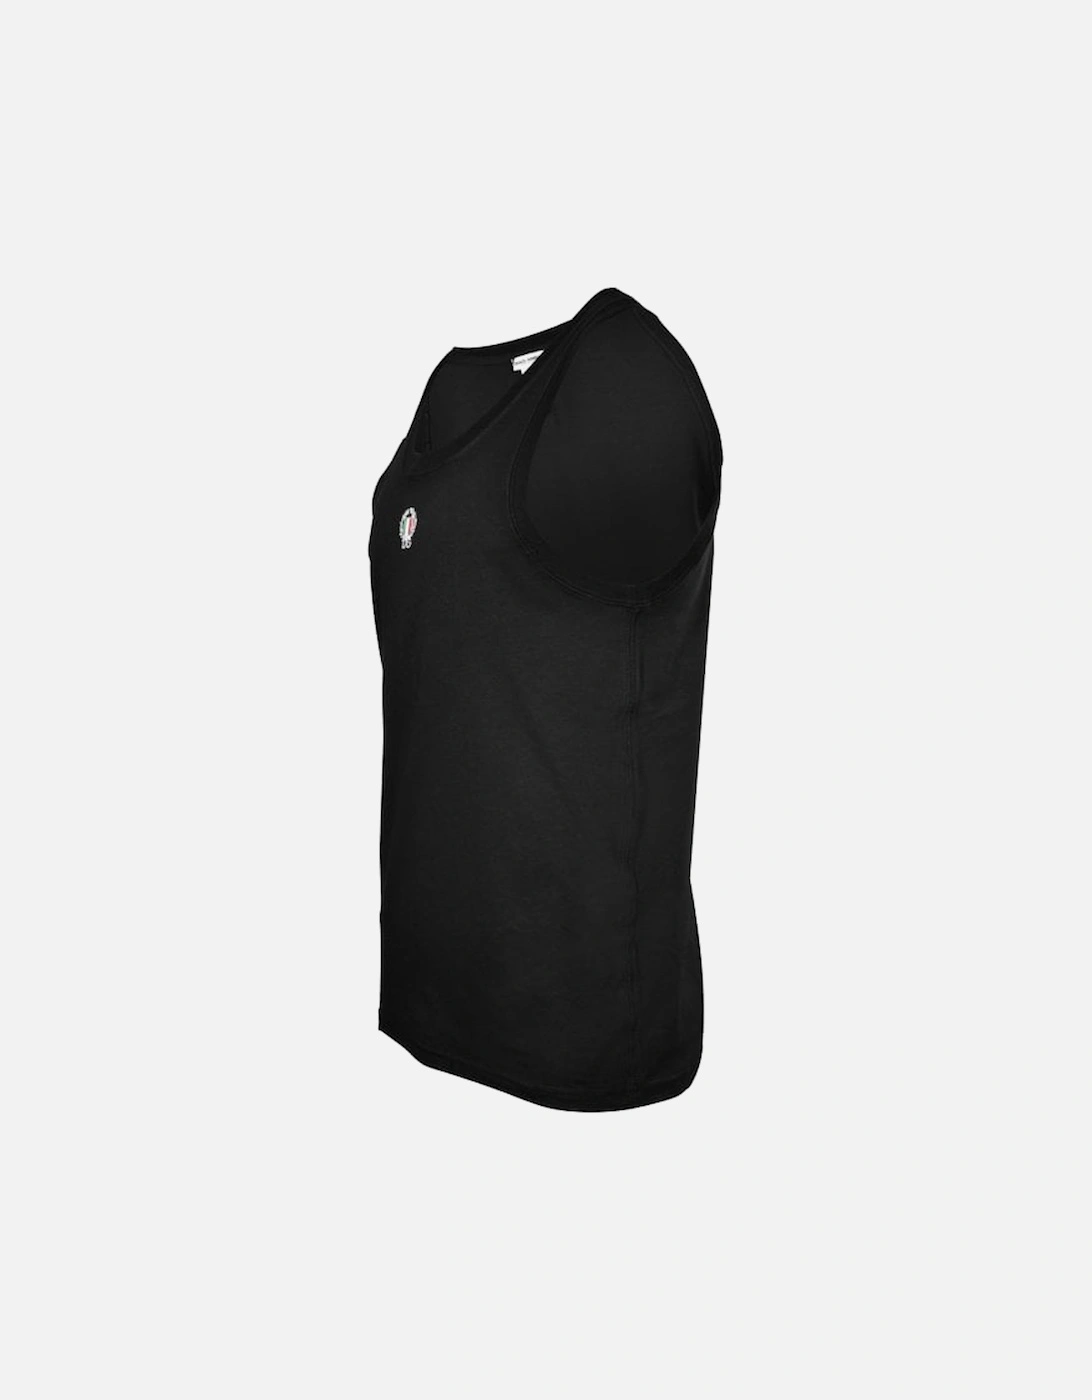 Sport Crest Tank Top Vest, Black